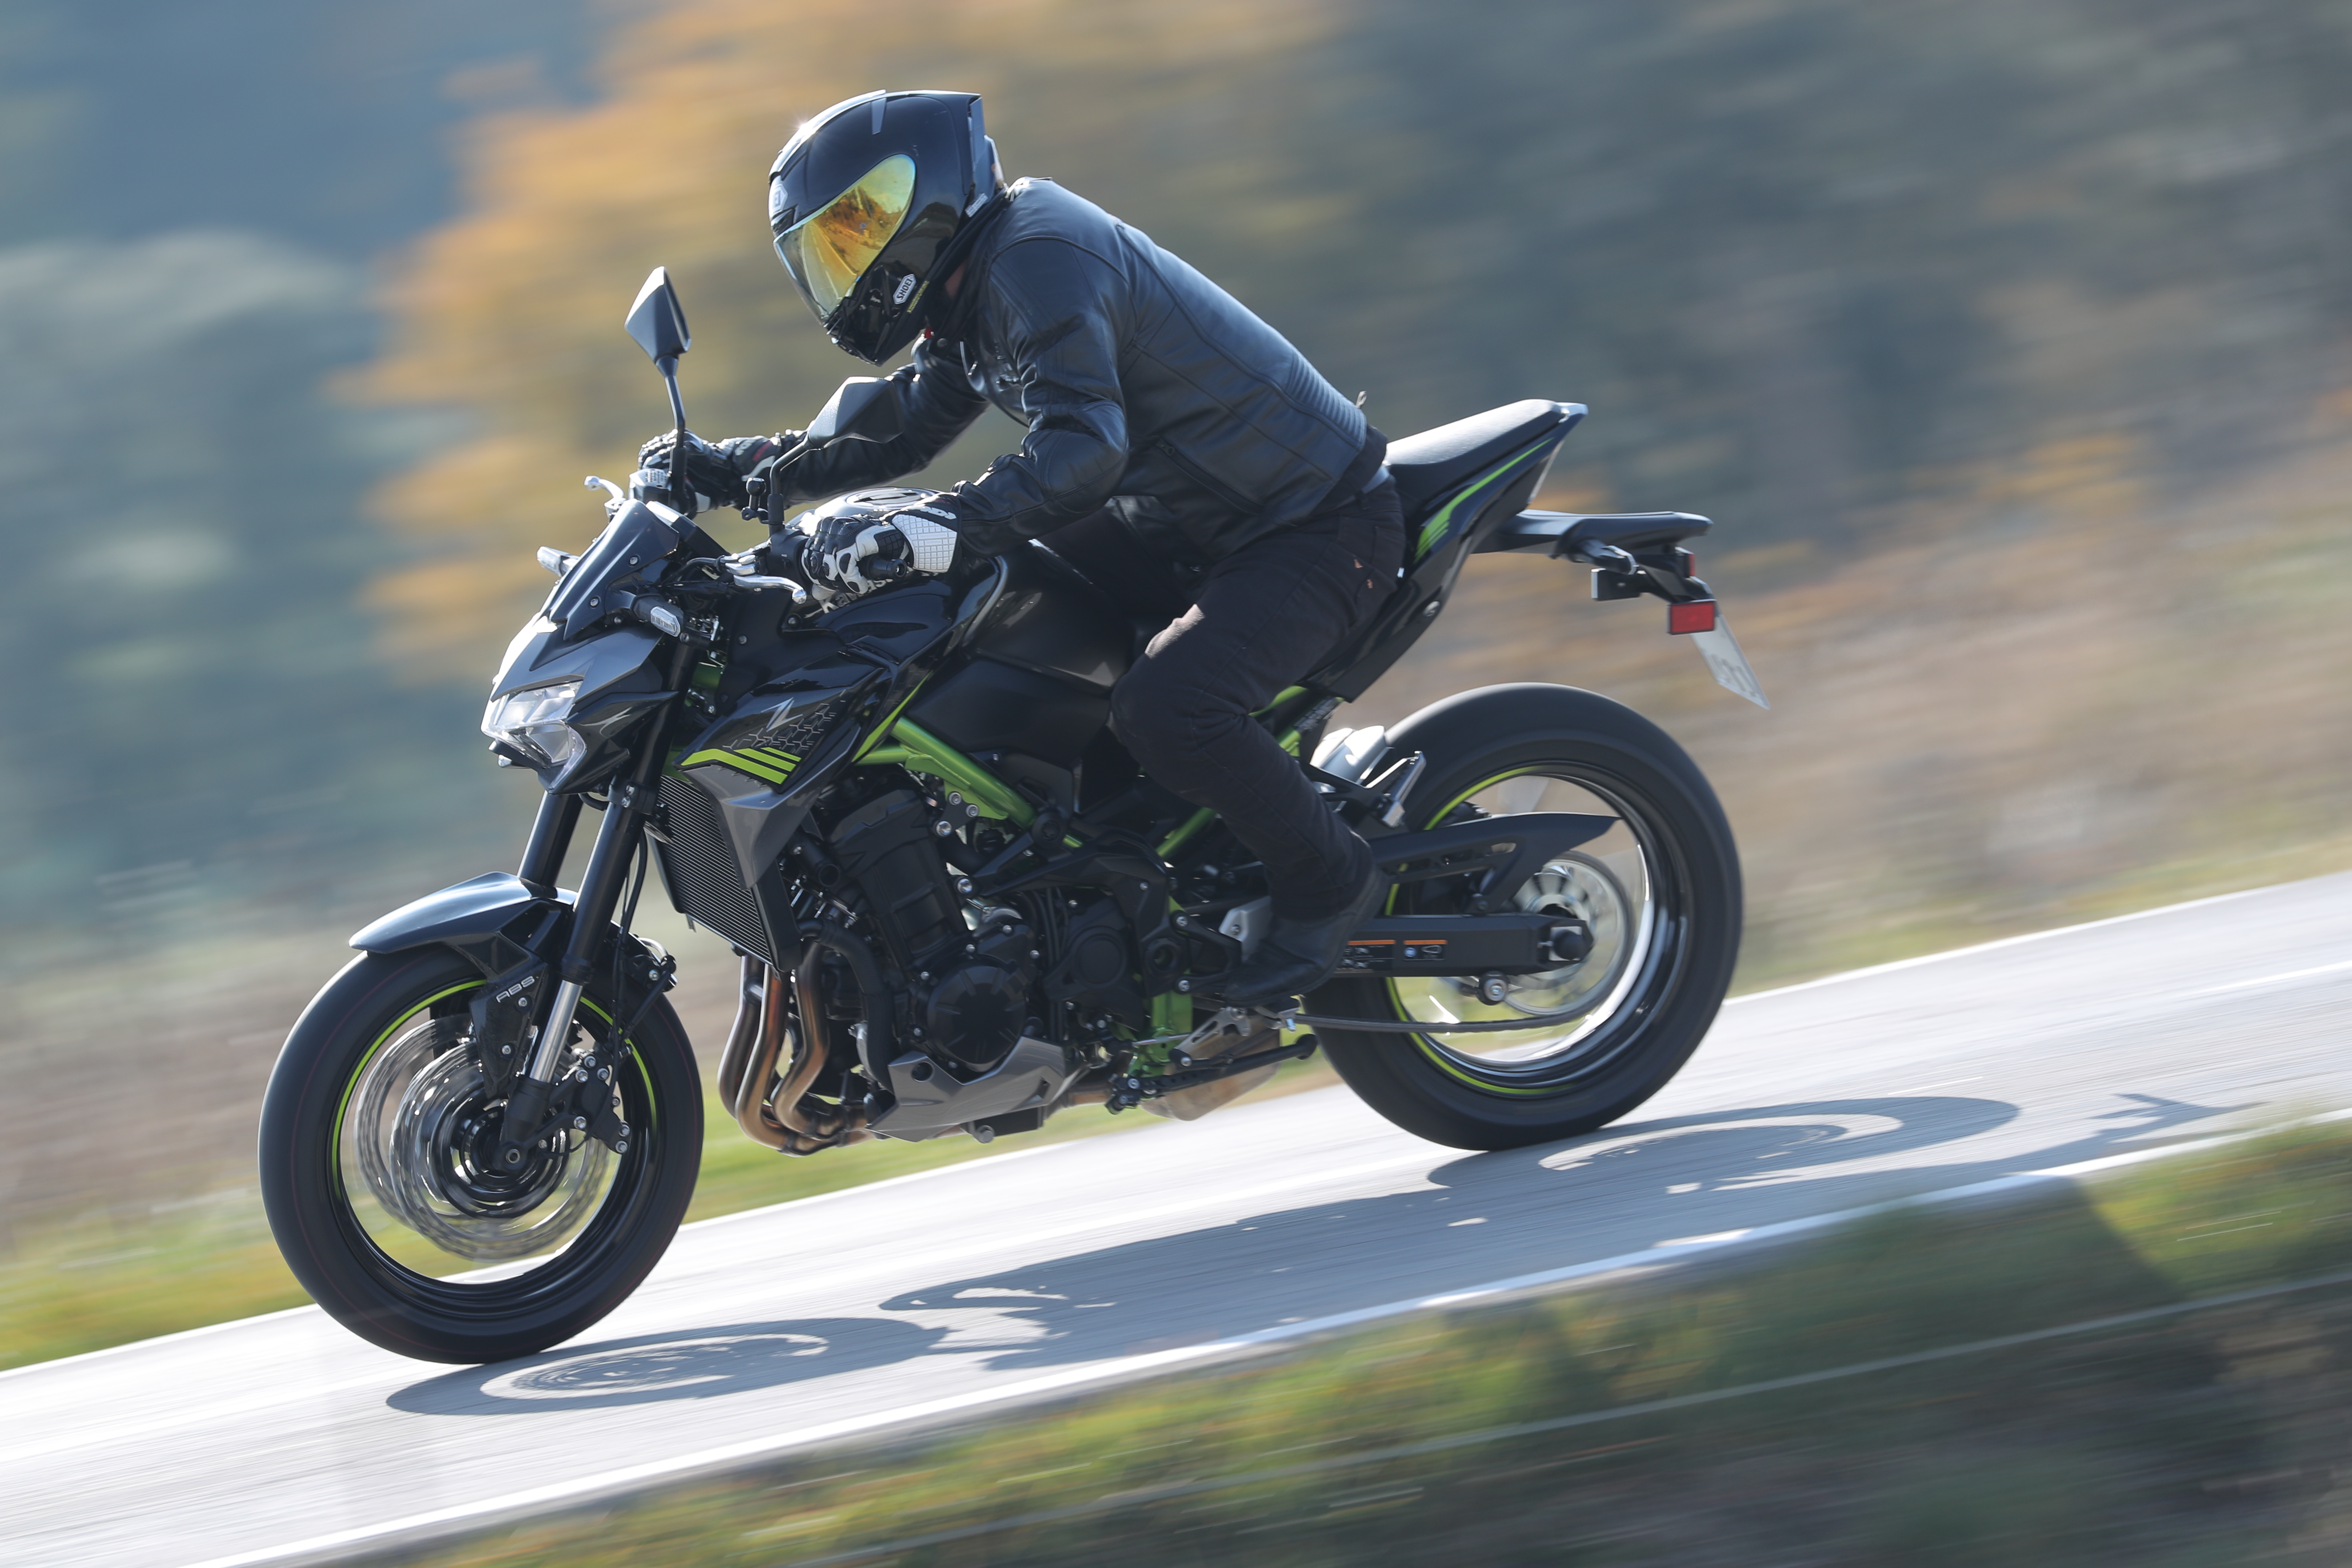 2020 Kawasaki Z900 ABS, Road Test Review